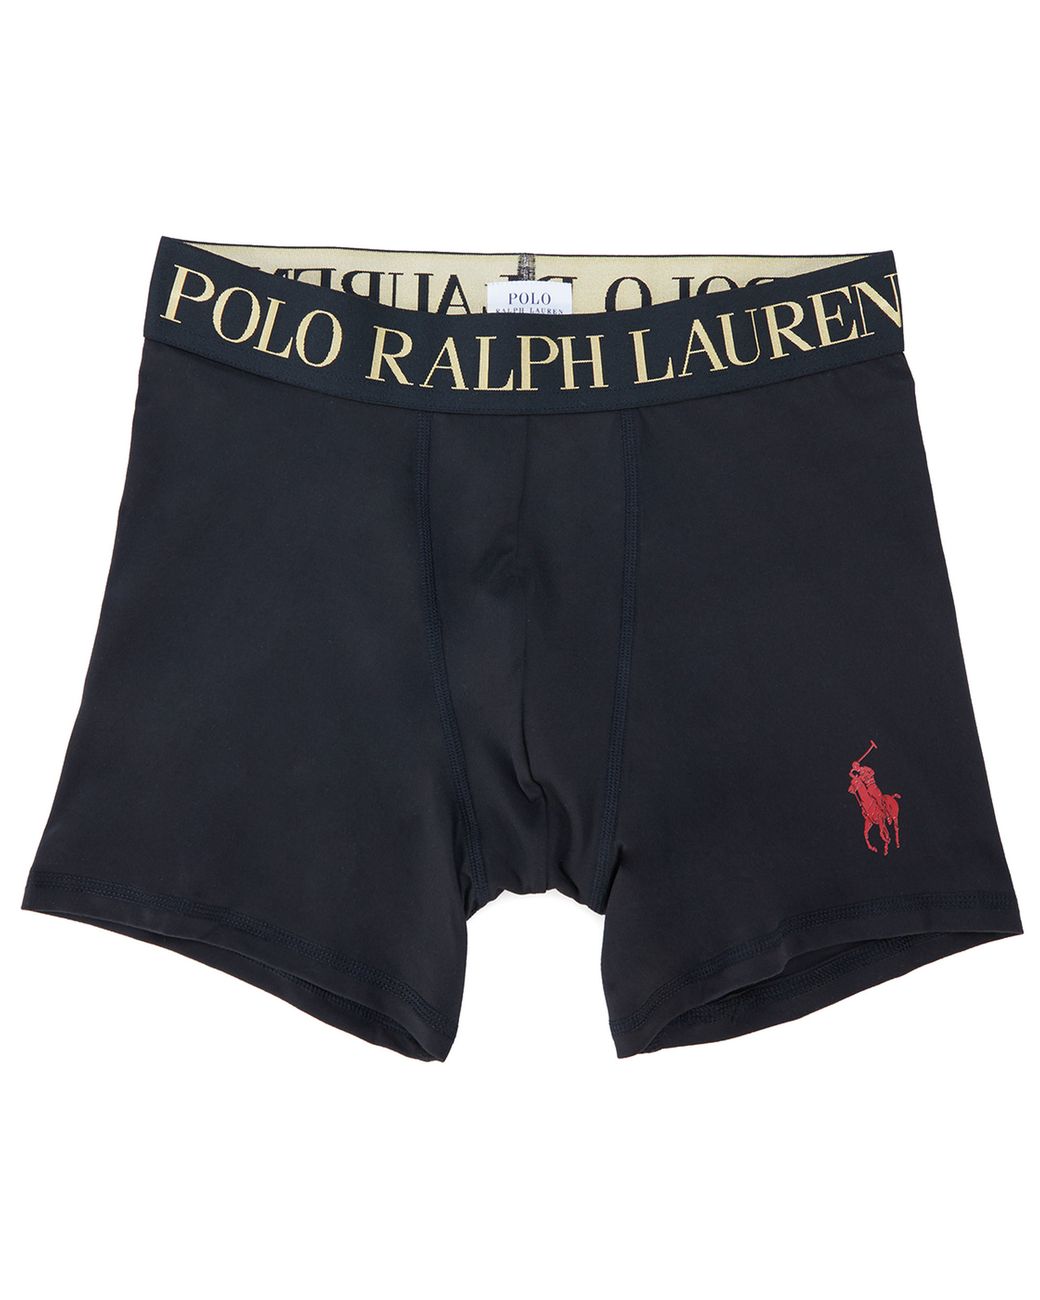 Polo ralph lauren Black Microfibre Mid-length Boxer Shorts in Black for ...